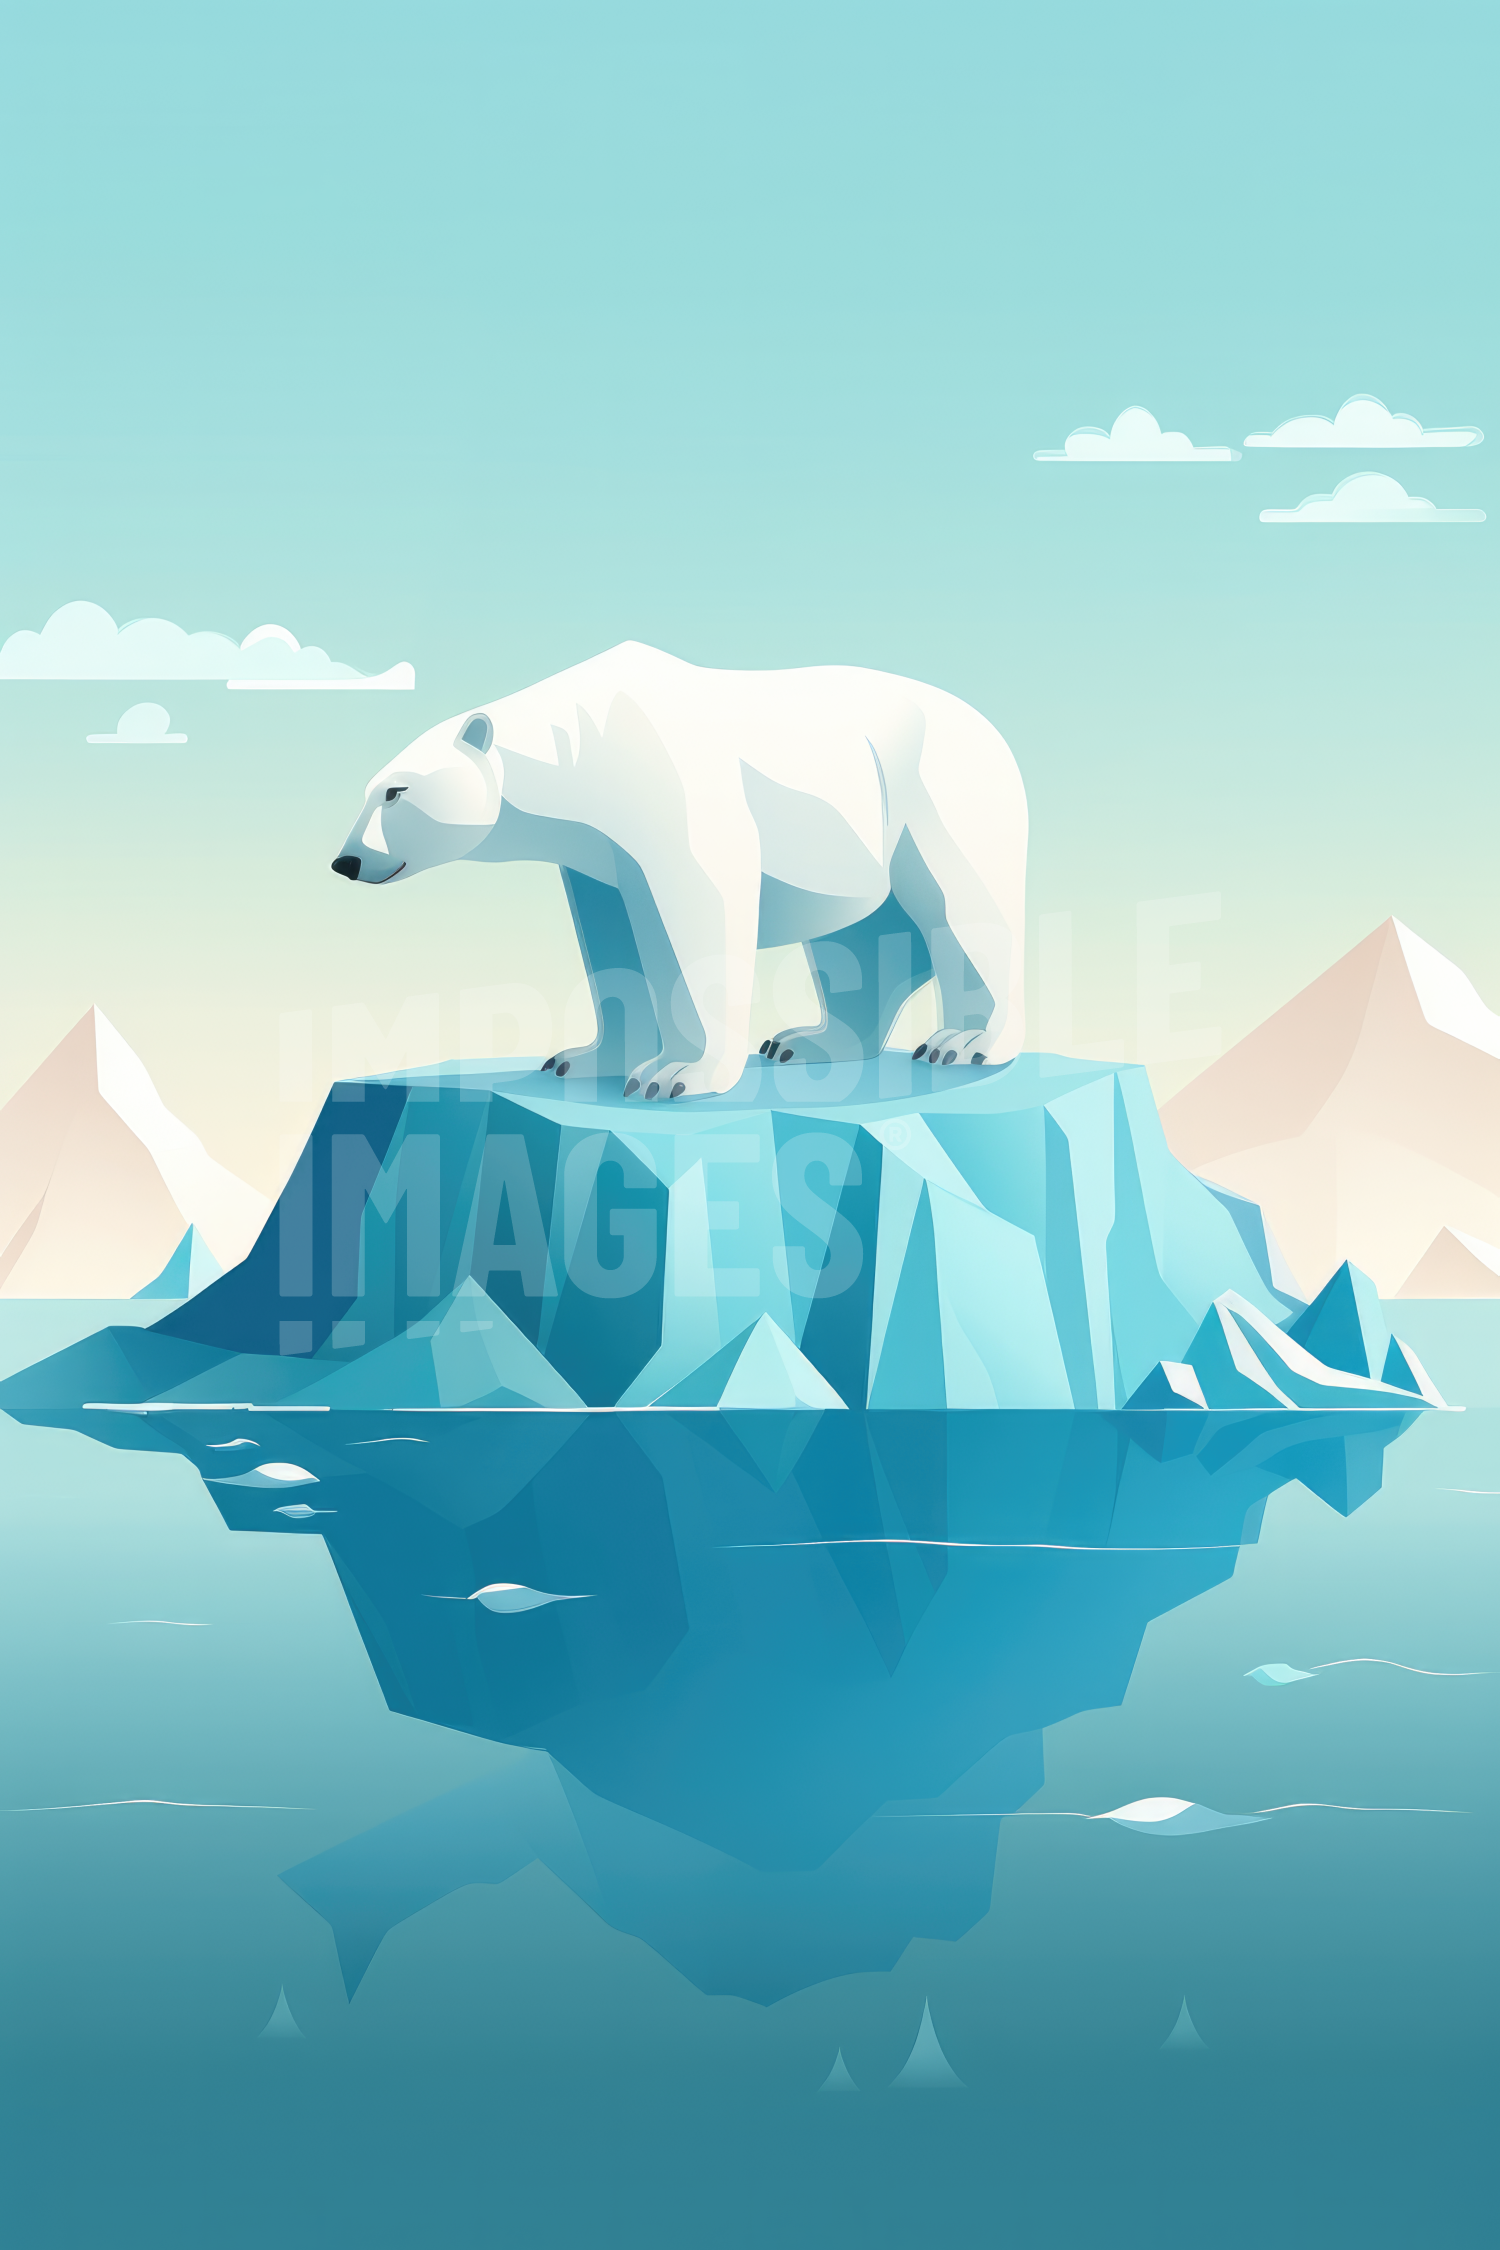 Global warming polarbear illustration - 